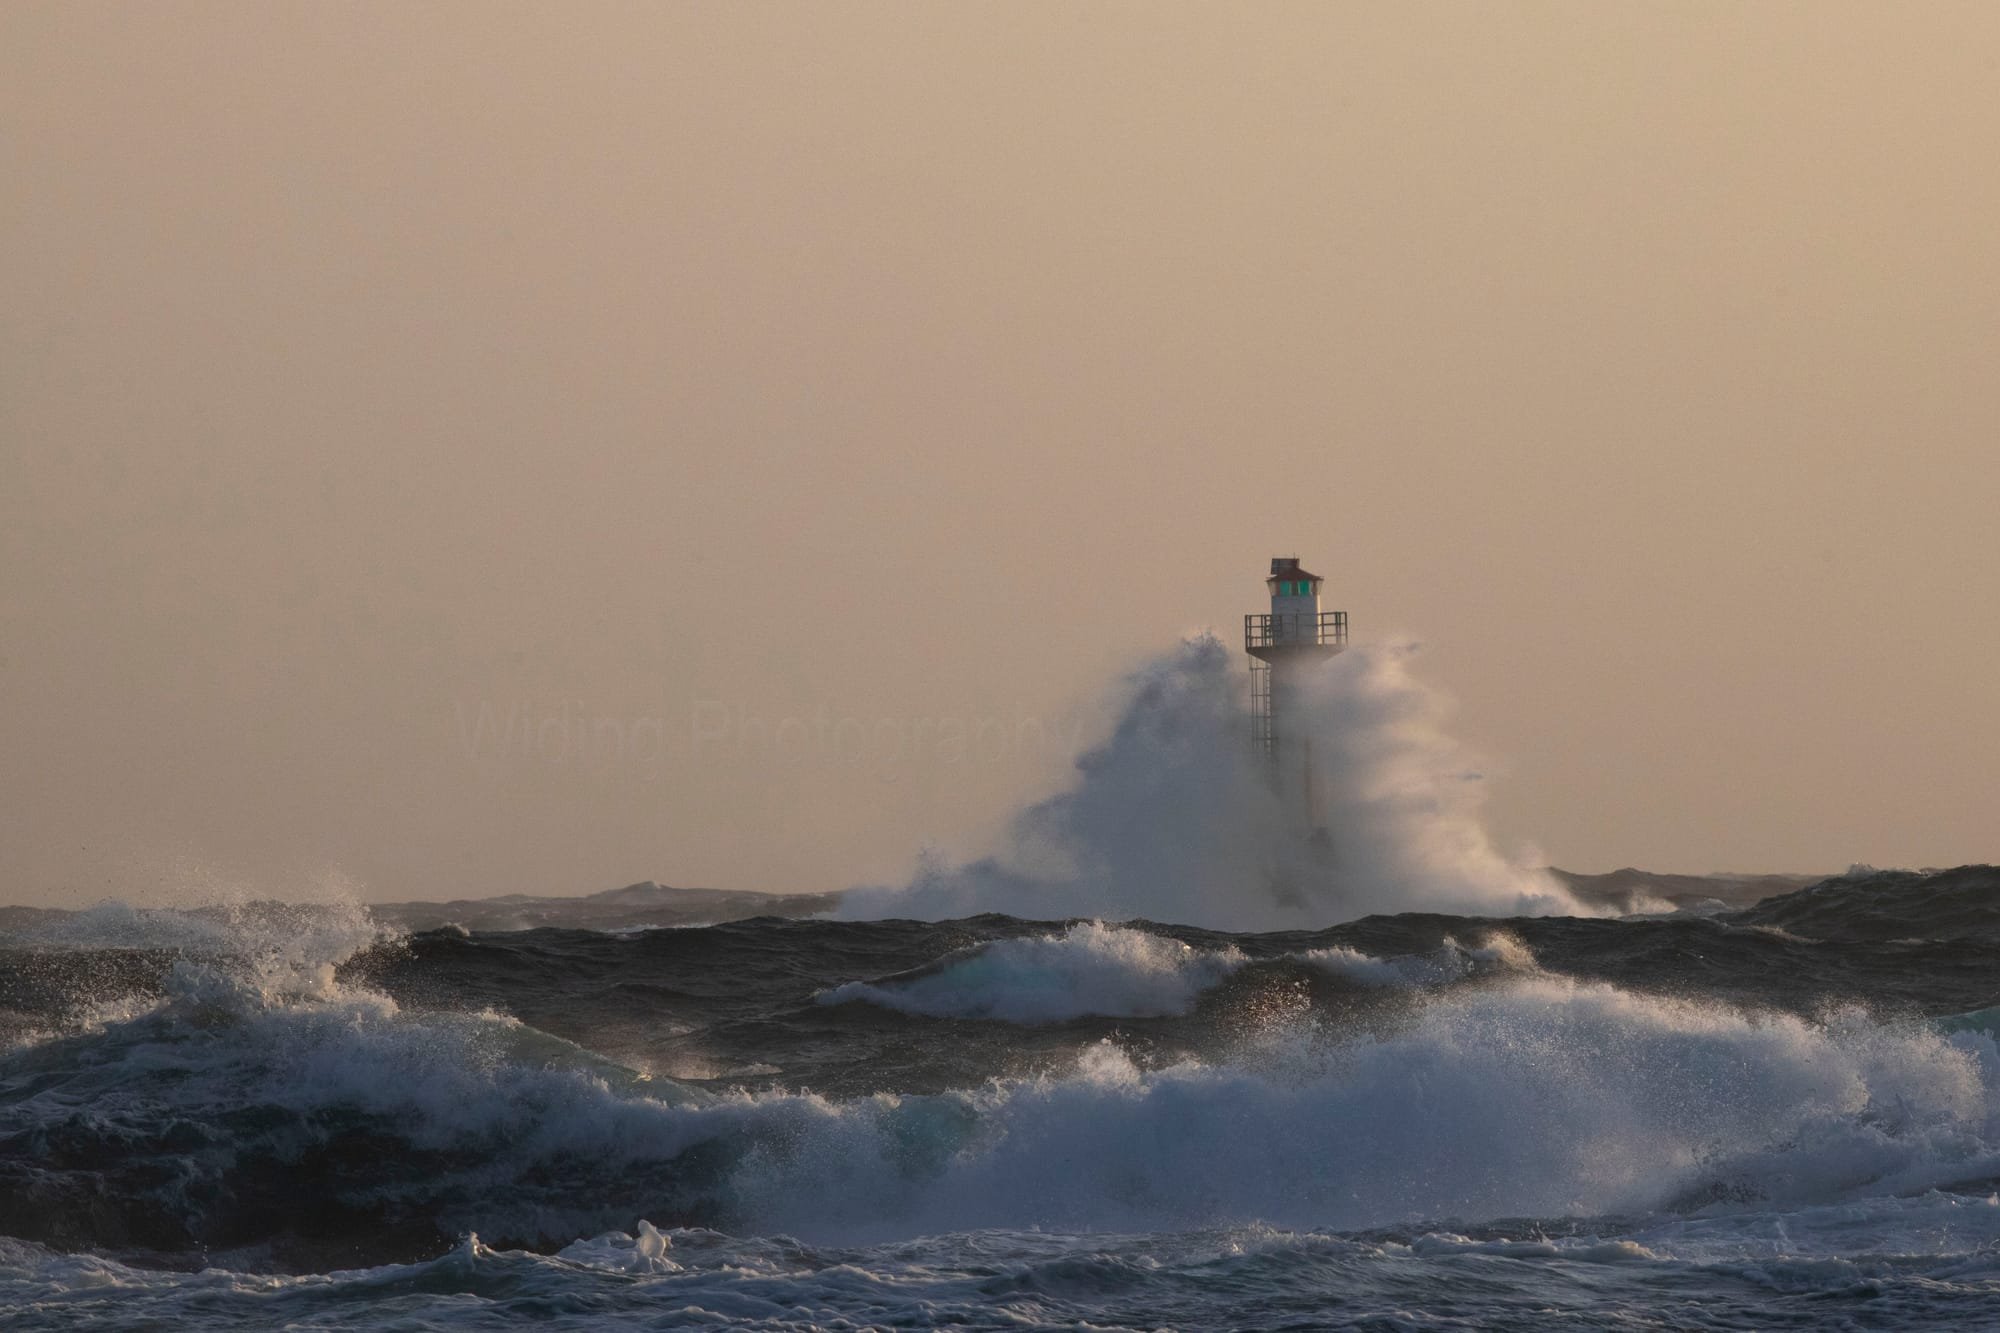 103. Väcker Lighthouse splits the Waves